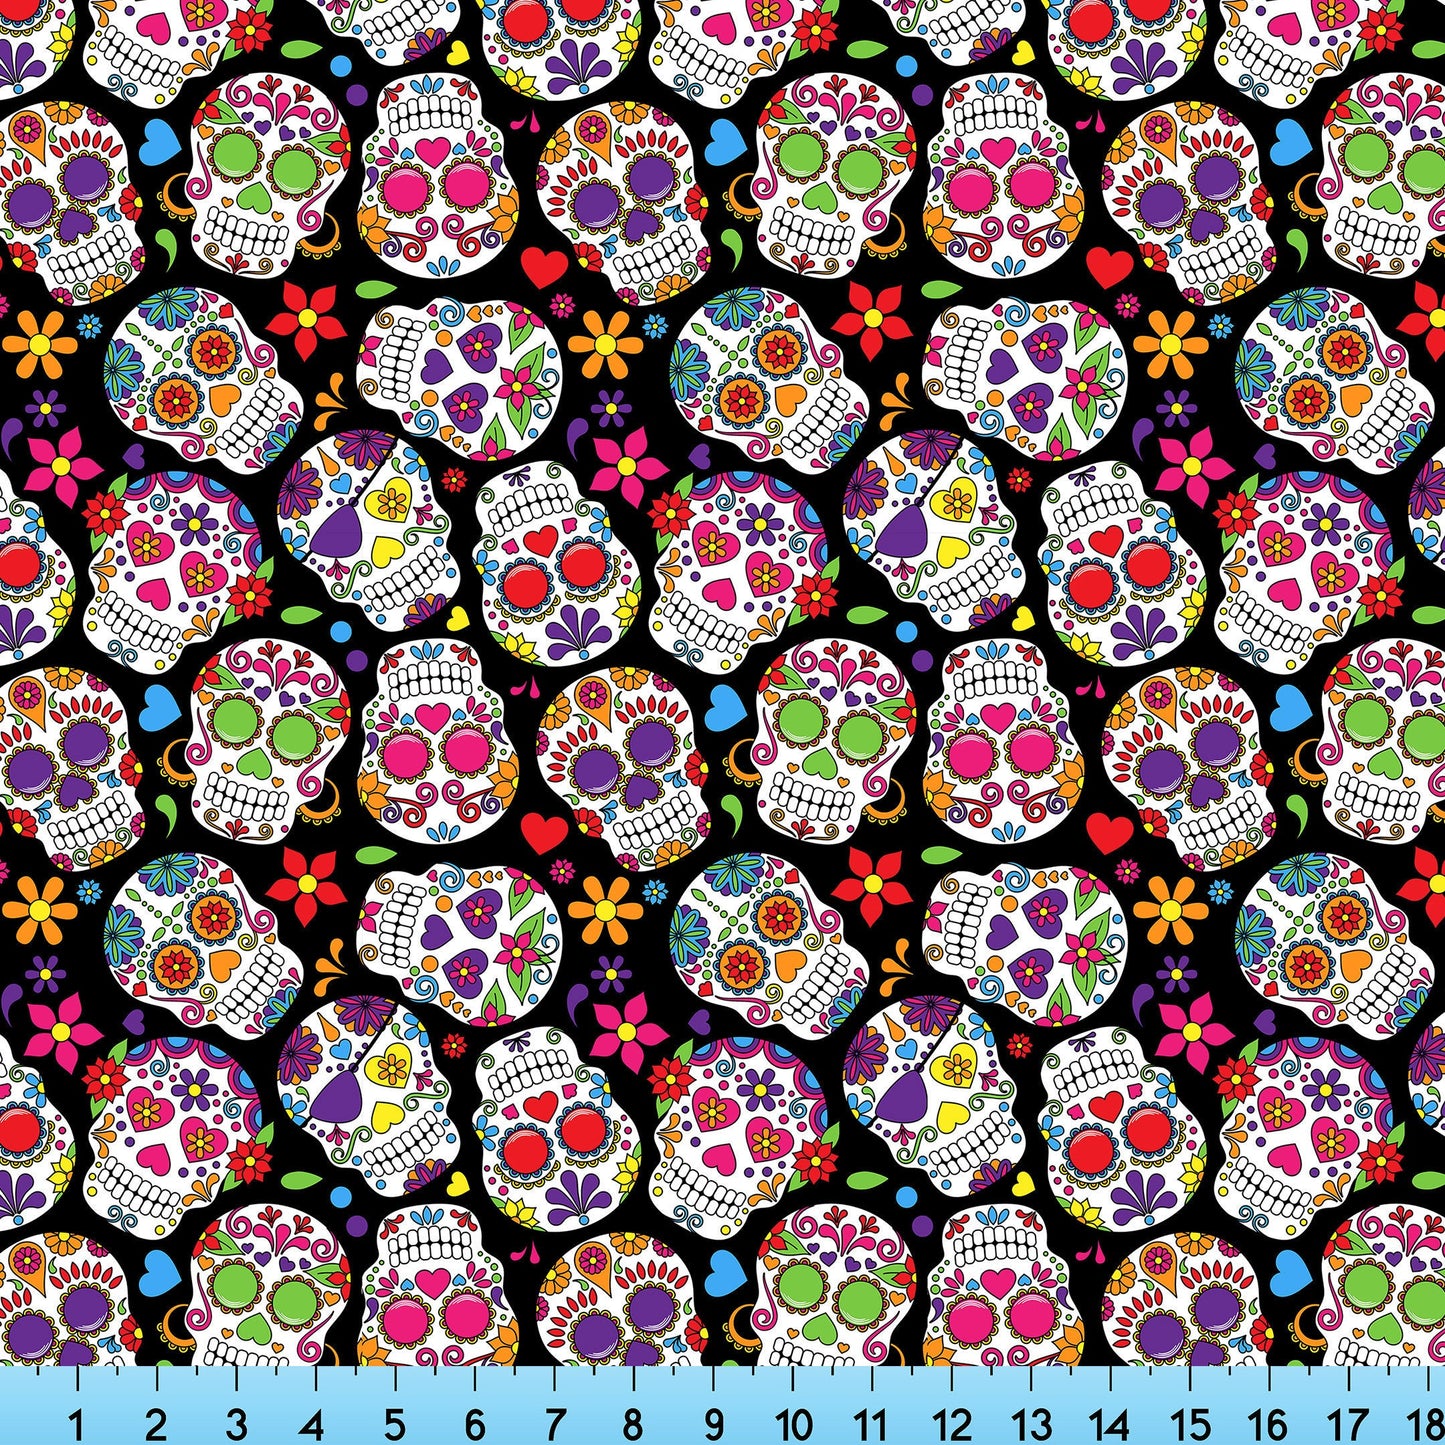 Colorful Sugar Skulls Fabric Pattern Print By the Yard, Half Yard or Fat Quarter